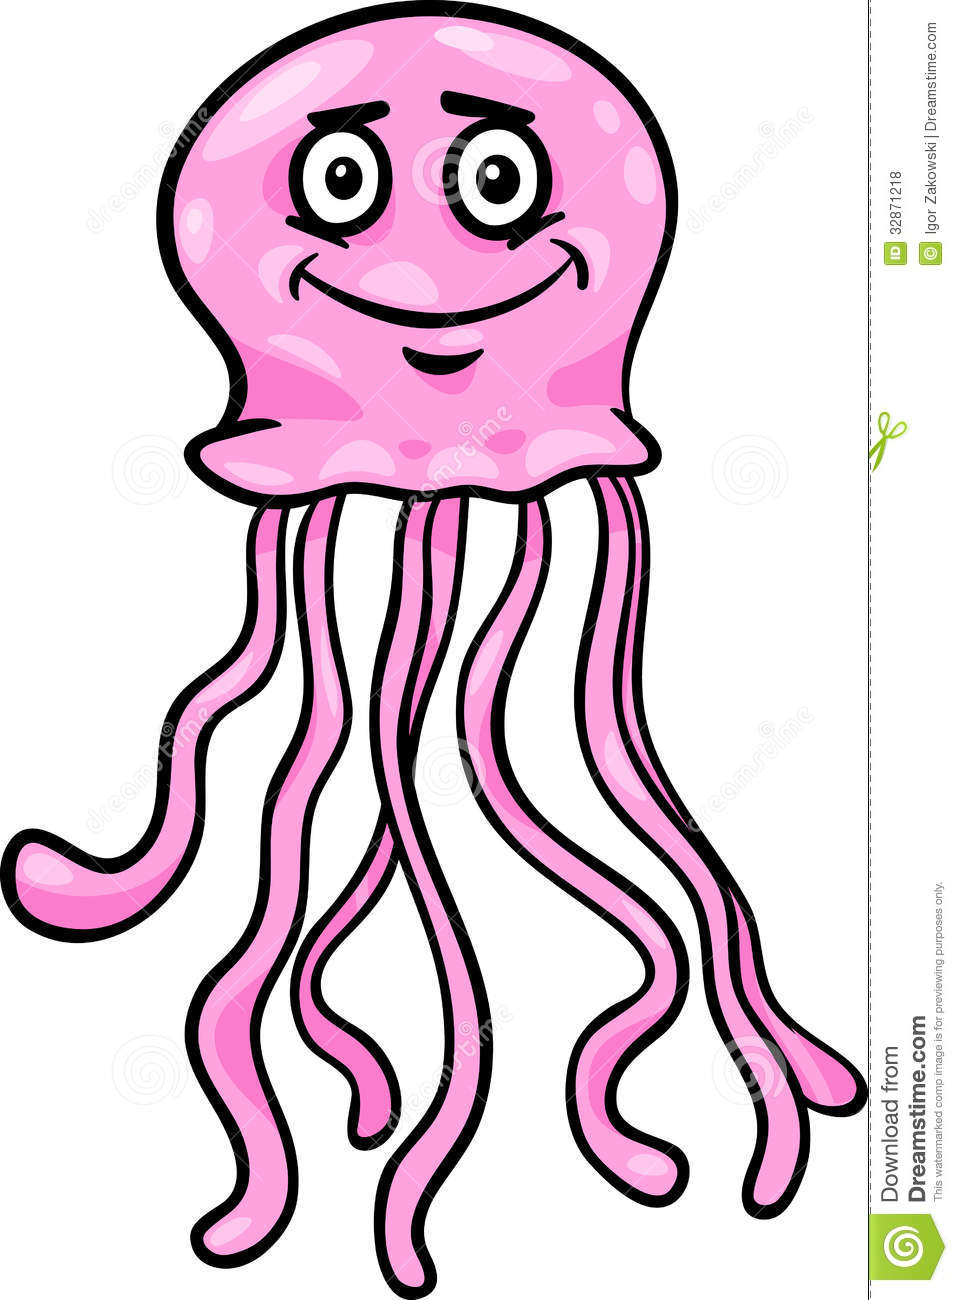 Jellyfish Clip Art Cartoon Illustration Royalty Free Stock Photos